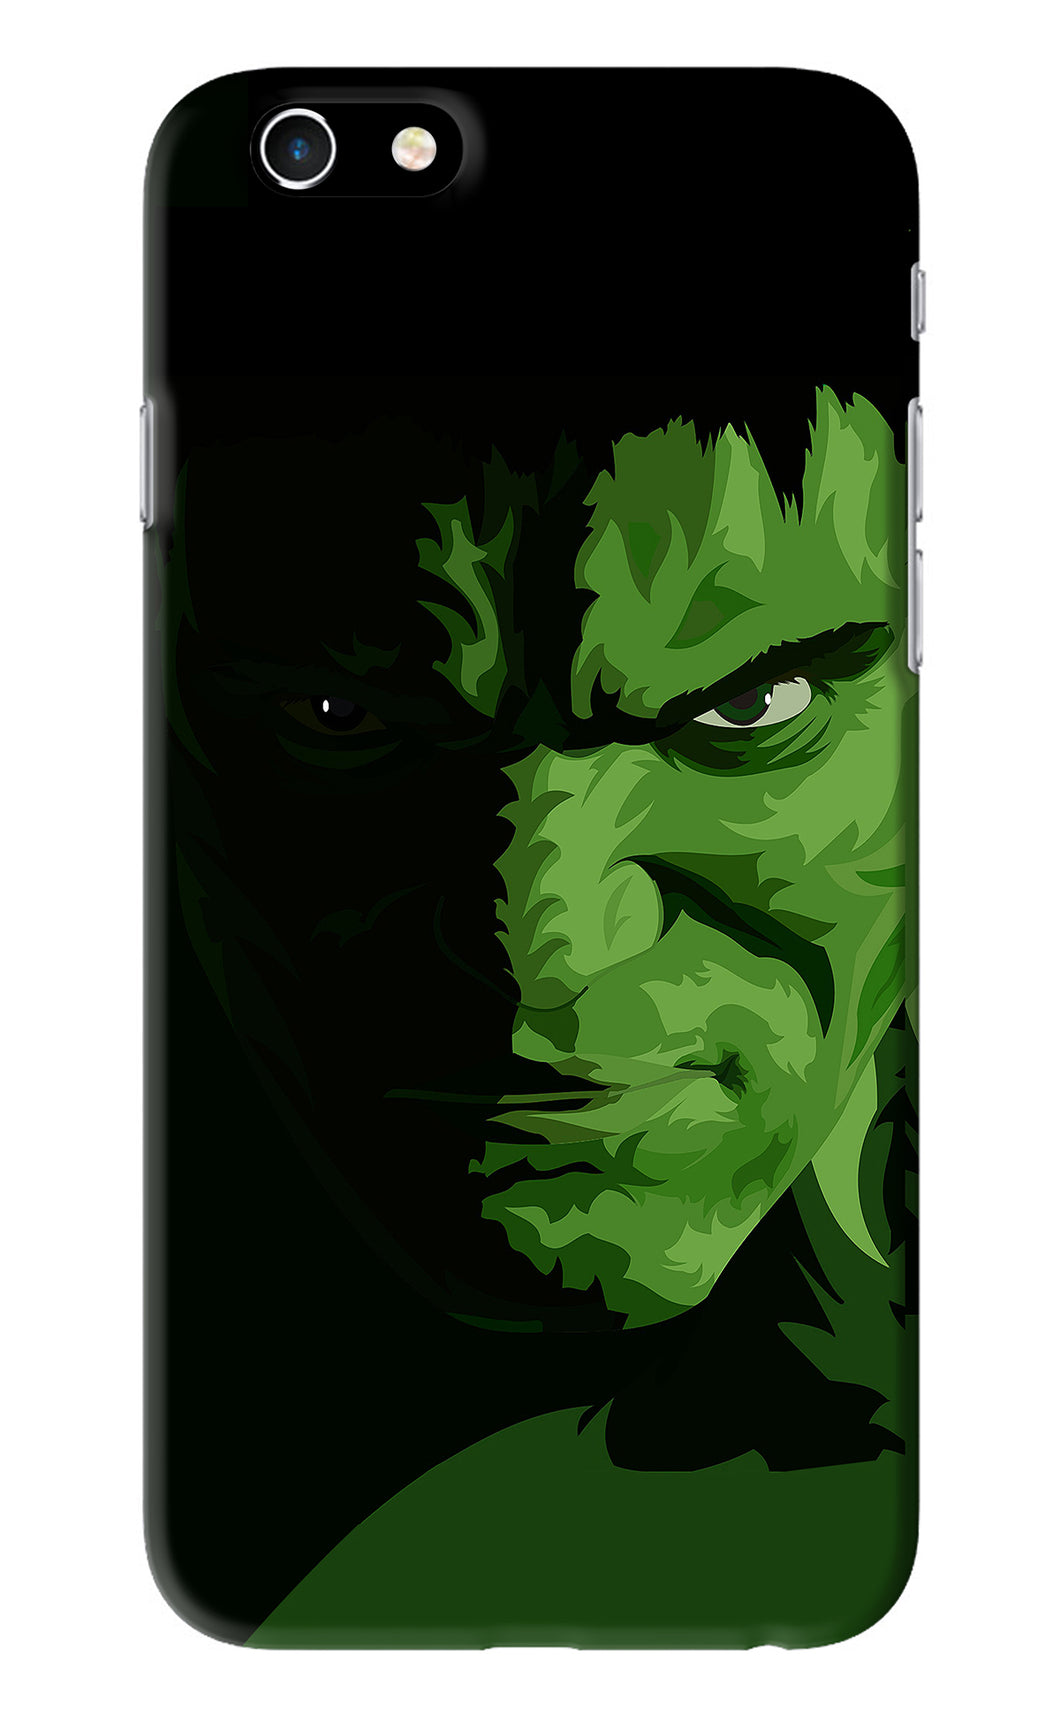 Hulk iPhone 6 Back Skin Wrap